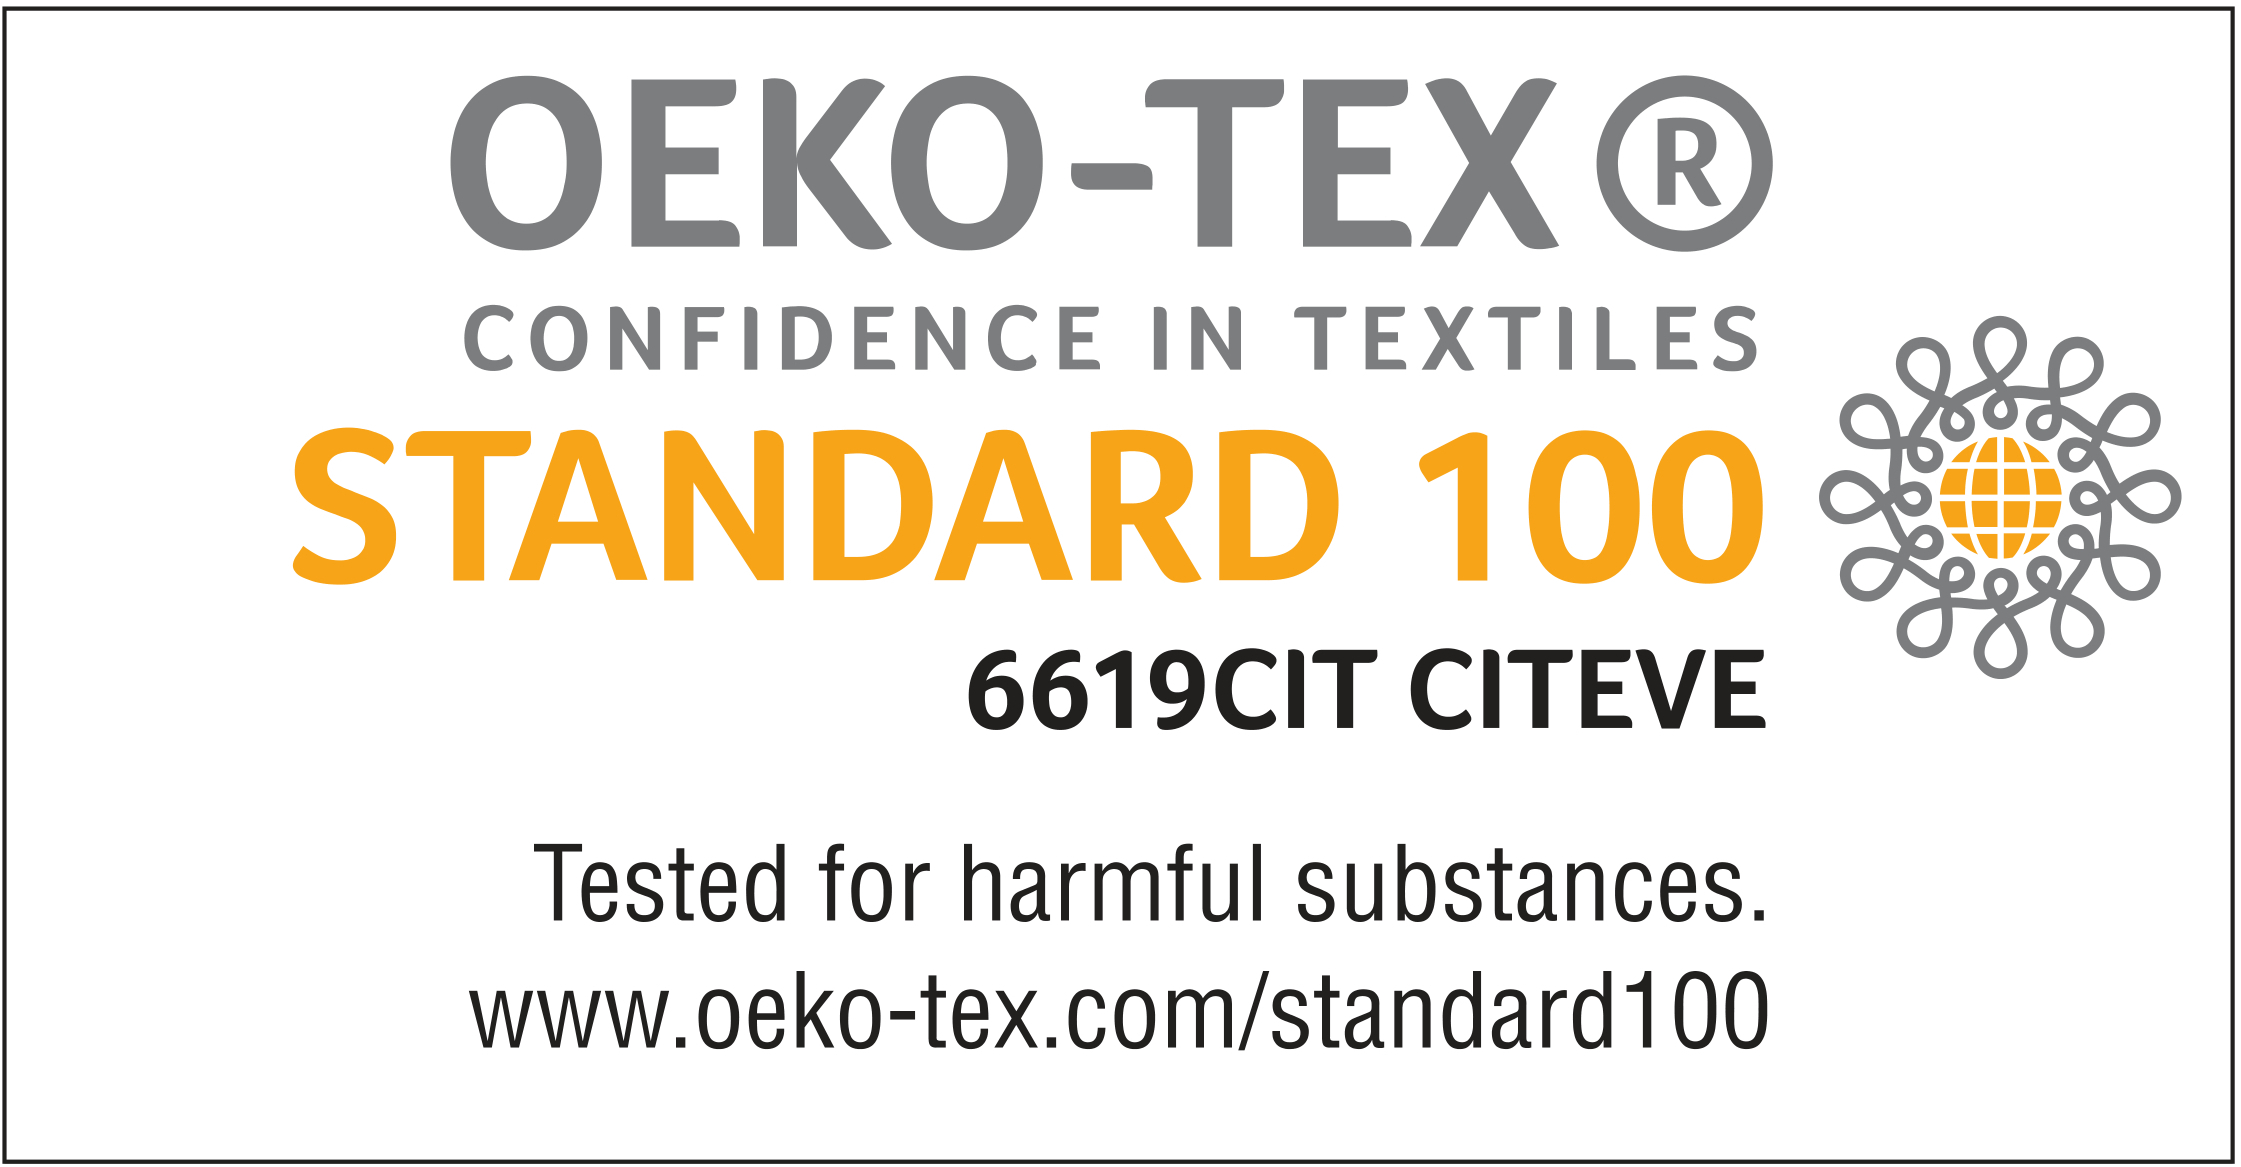 Standard-100-oeko-tex